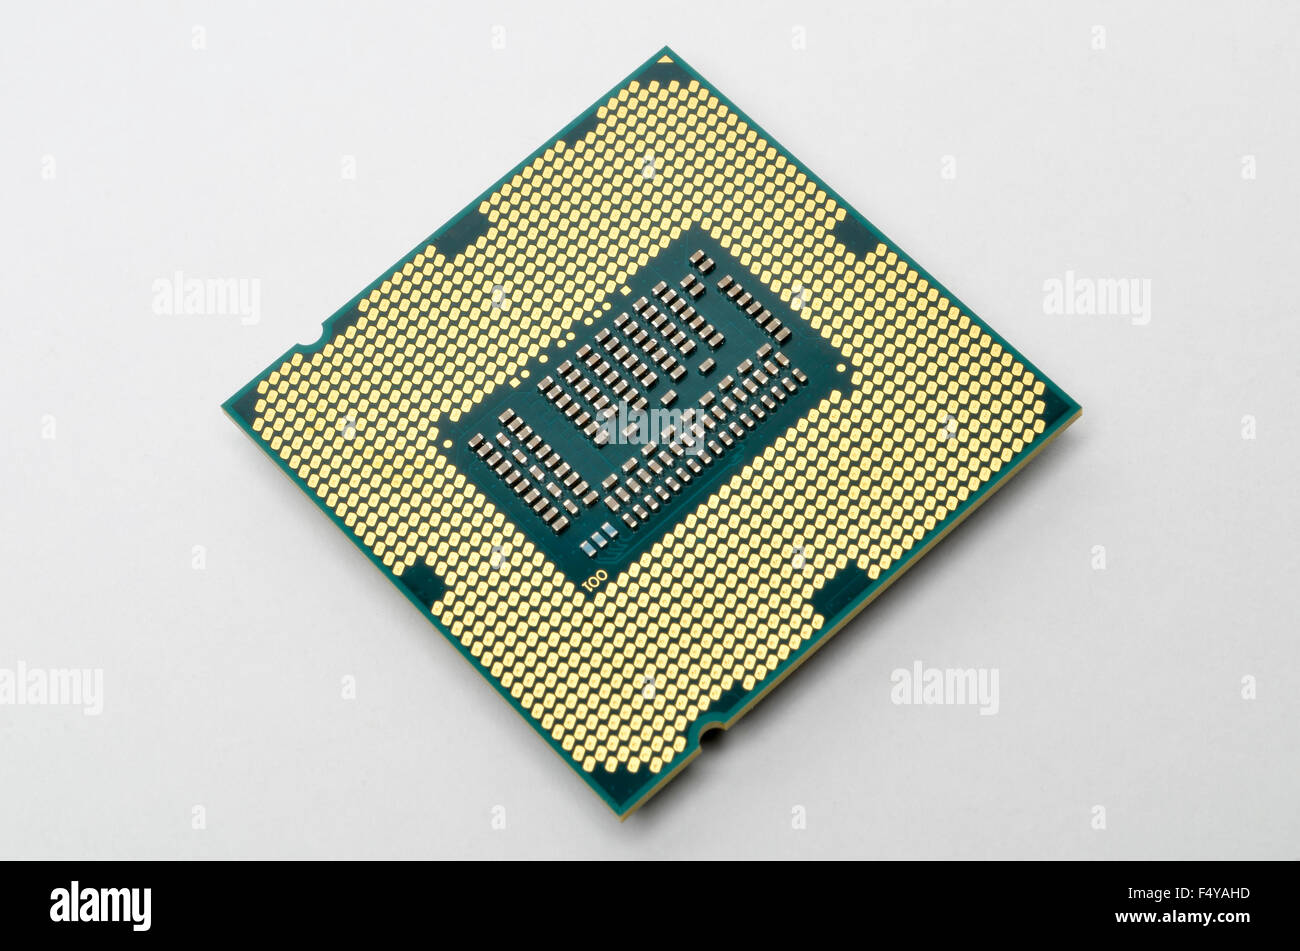 Intel i5 3570K 3.4 GHz Quad Core LGA1155 CPU processor chip on a white background. Stock Photo